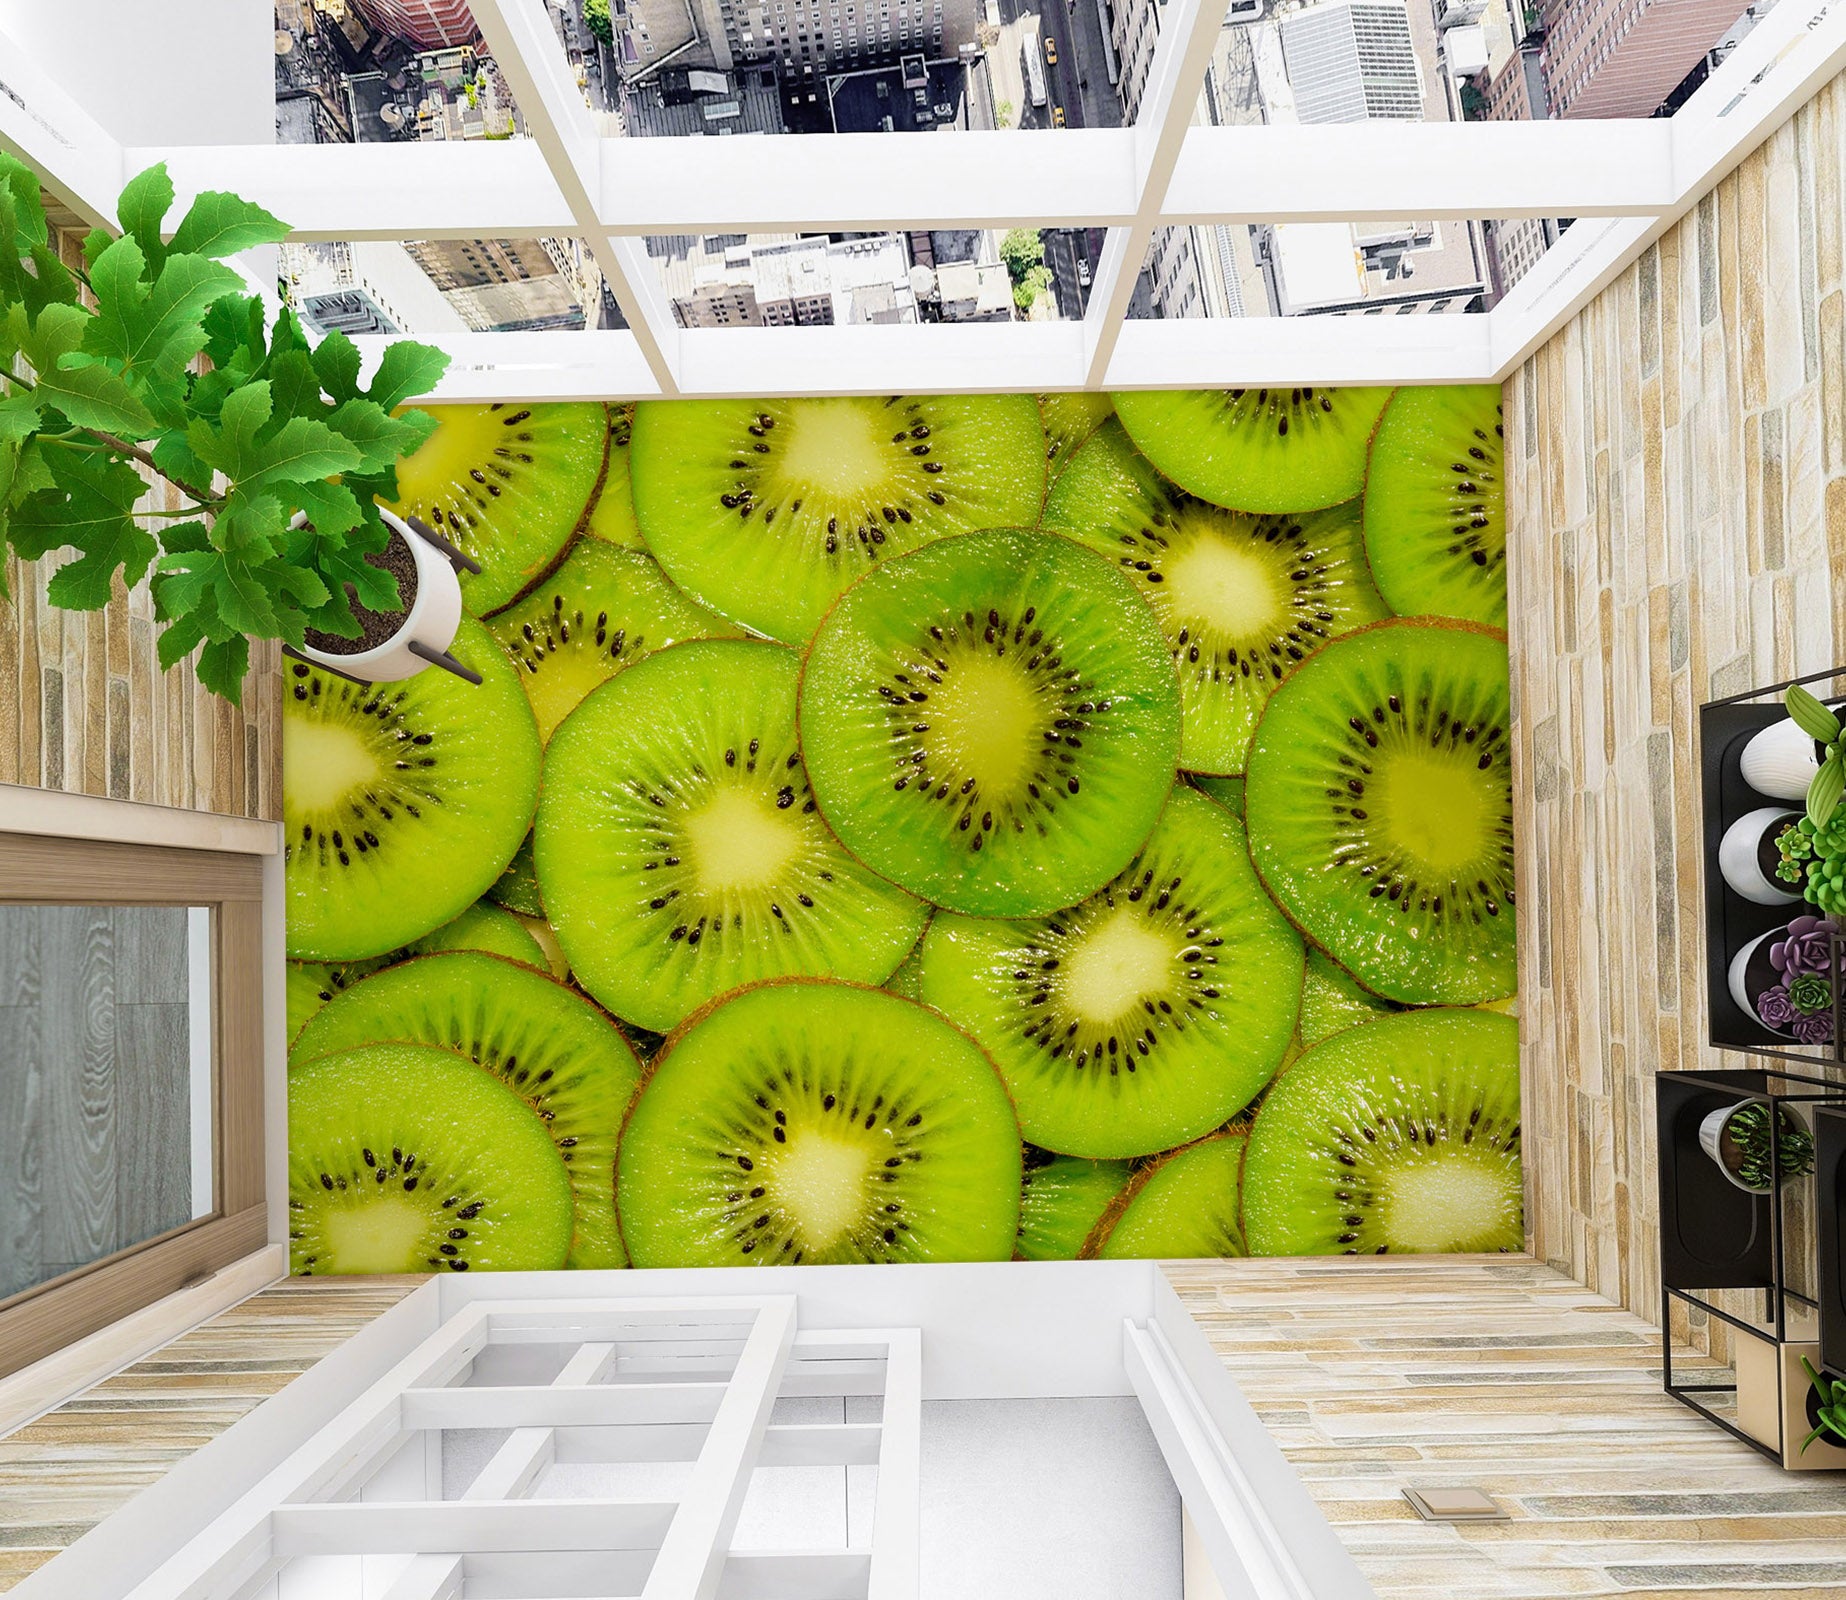 3D Green Kiwis 1406 Floor Mural  Wallpaper Murals Self-Adhesive Removable Print Epoxy